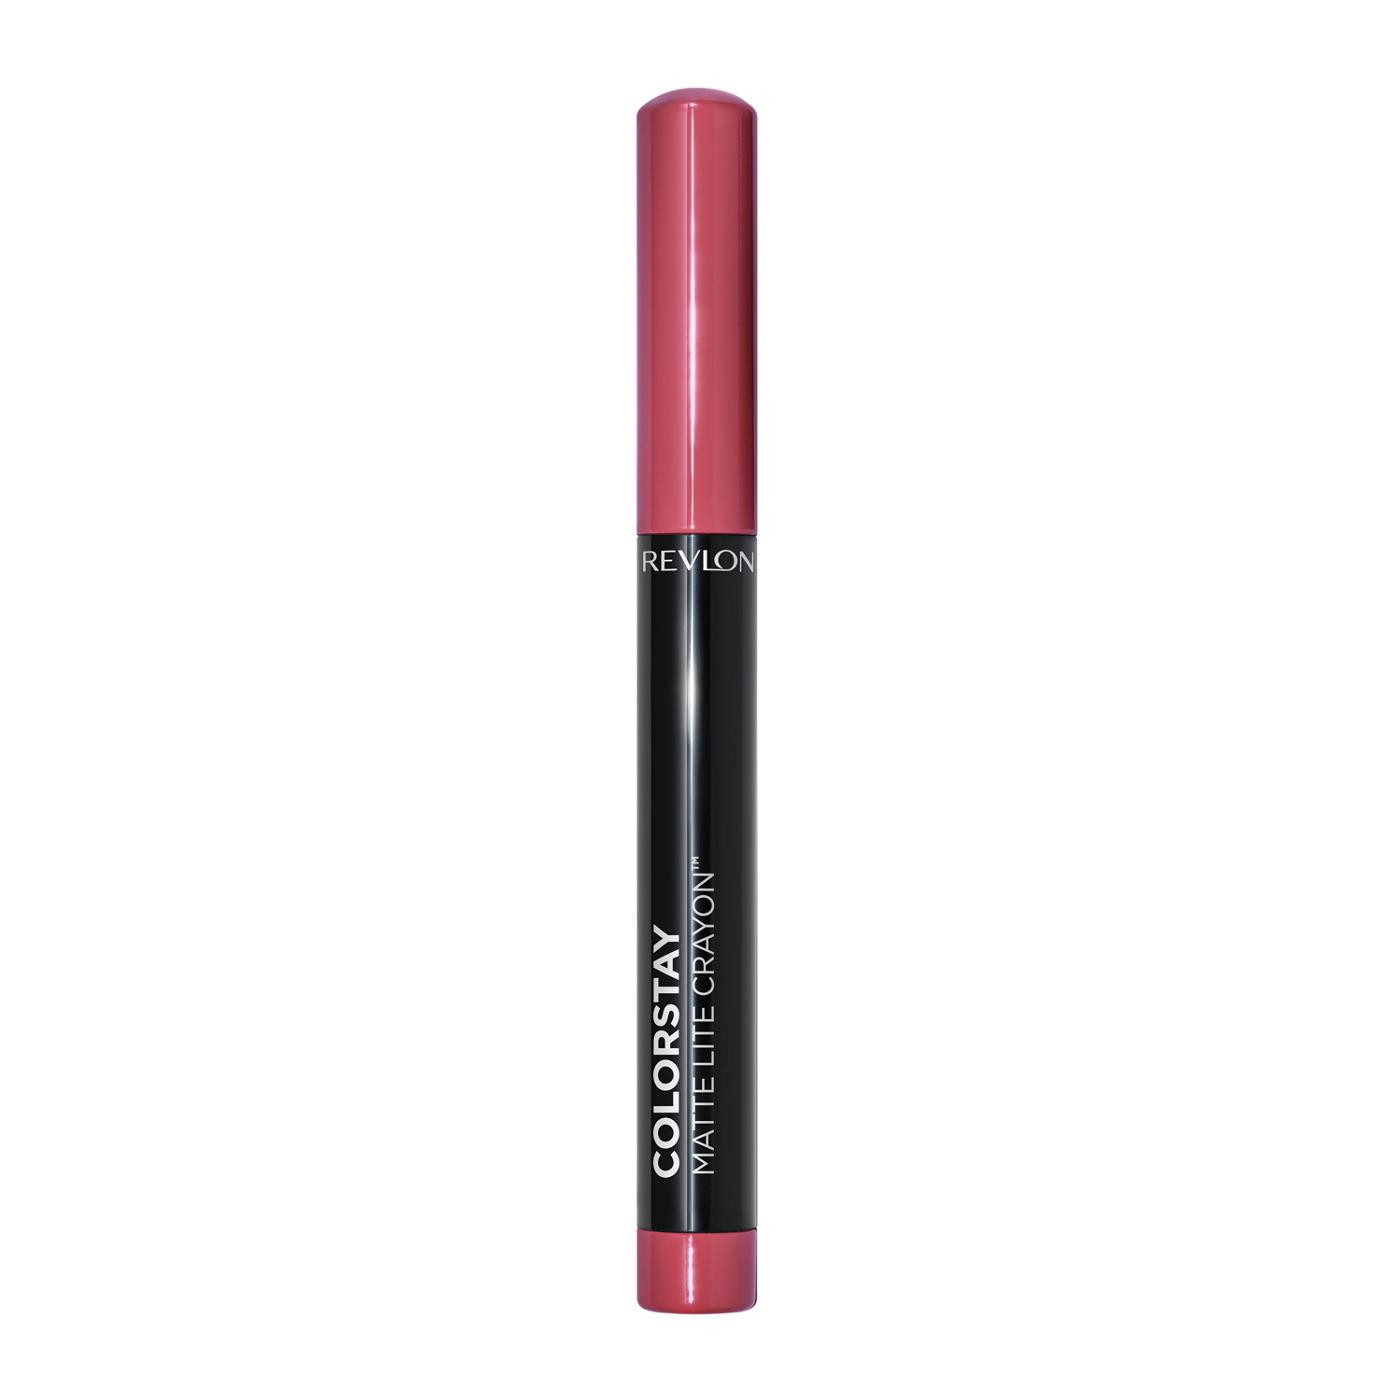 Revlon ColorStay Matte Lite Crayon Lipstick - Take Flight; image 1 of 7